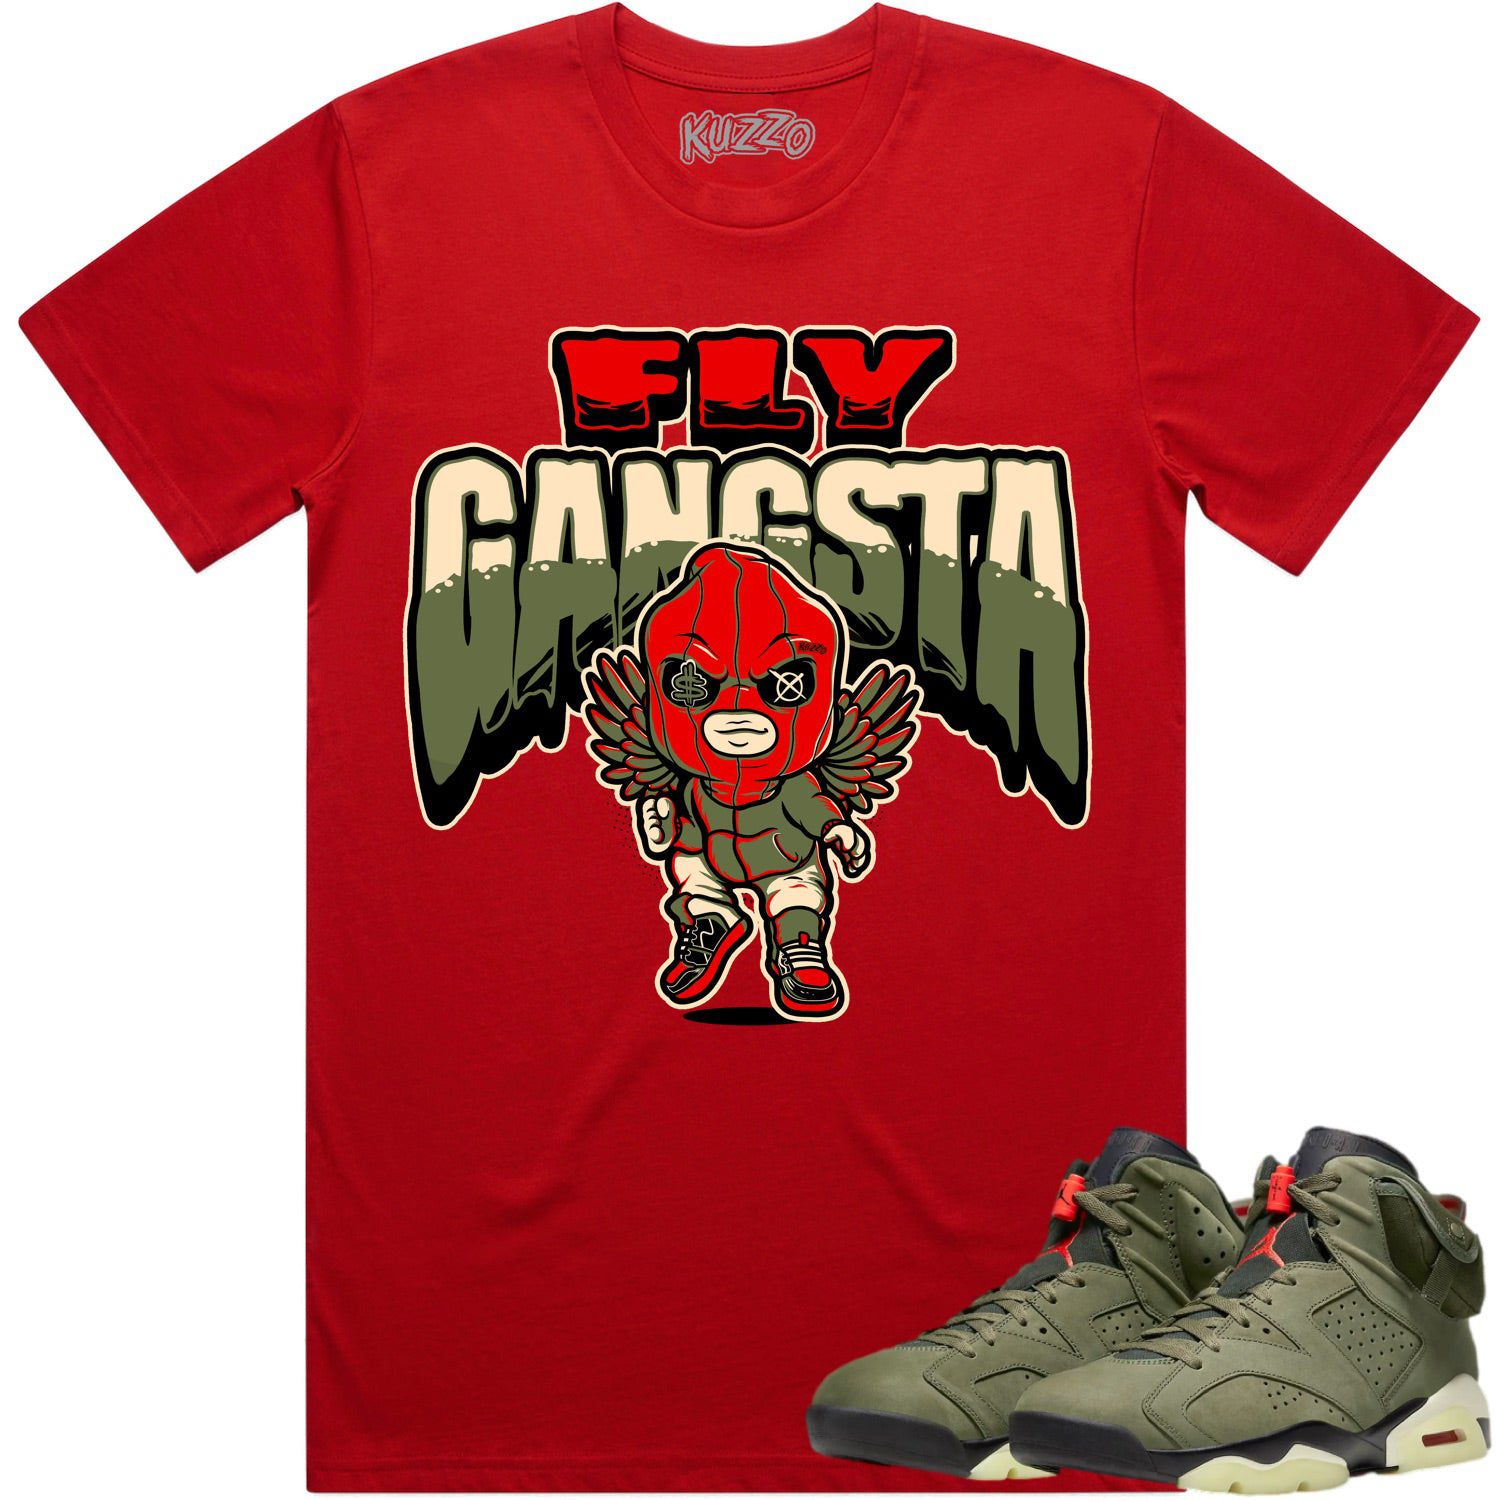 Cactus Jack 6s Shirt - Jordan 6 Travis Scott Shirts - Fly Gangsta